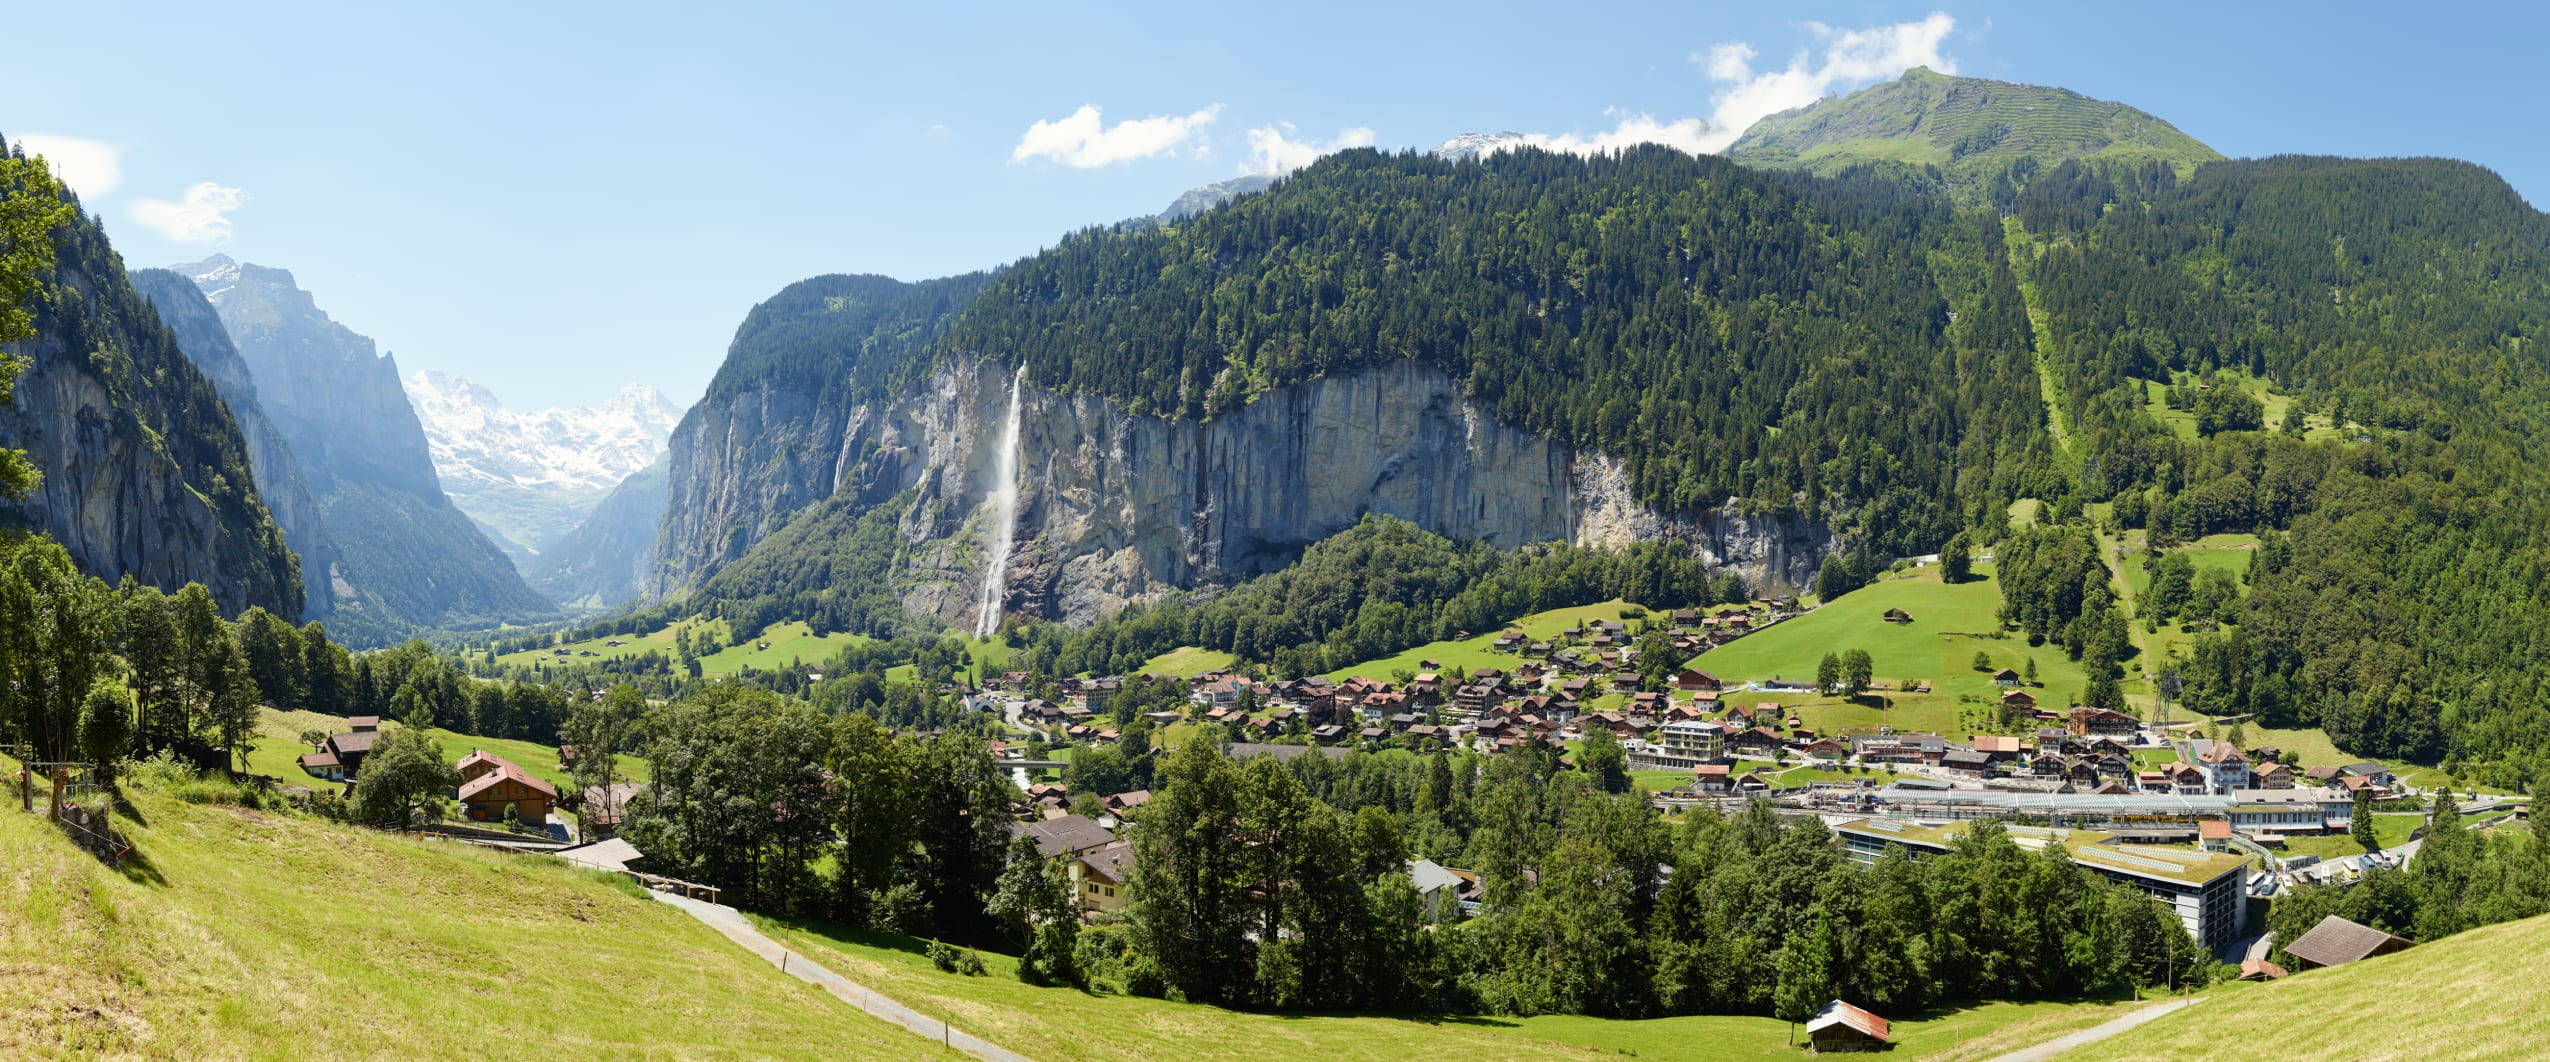 Lauterbrunnen-Sommer-Staubbachfall-Berner-Alpen.jpg